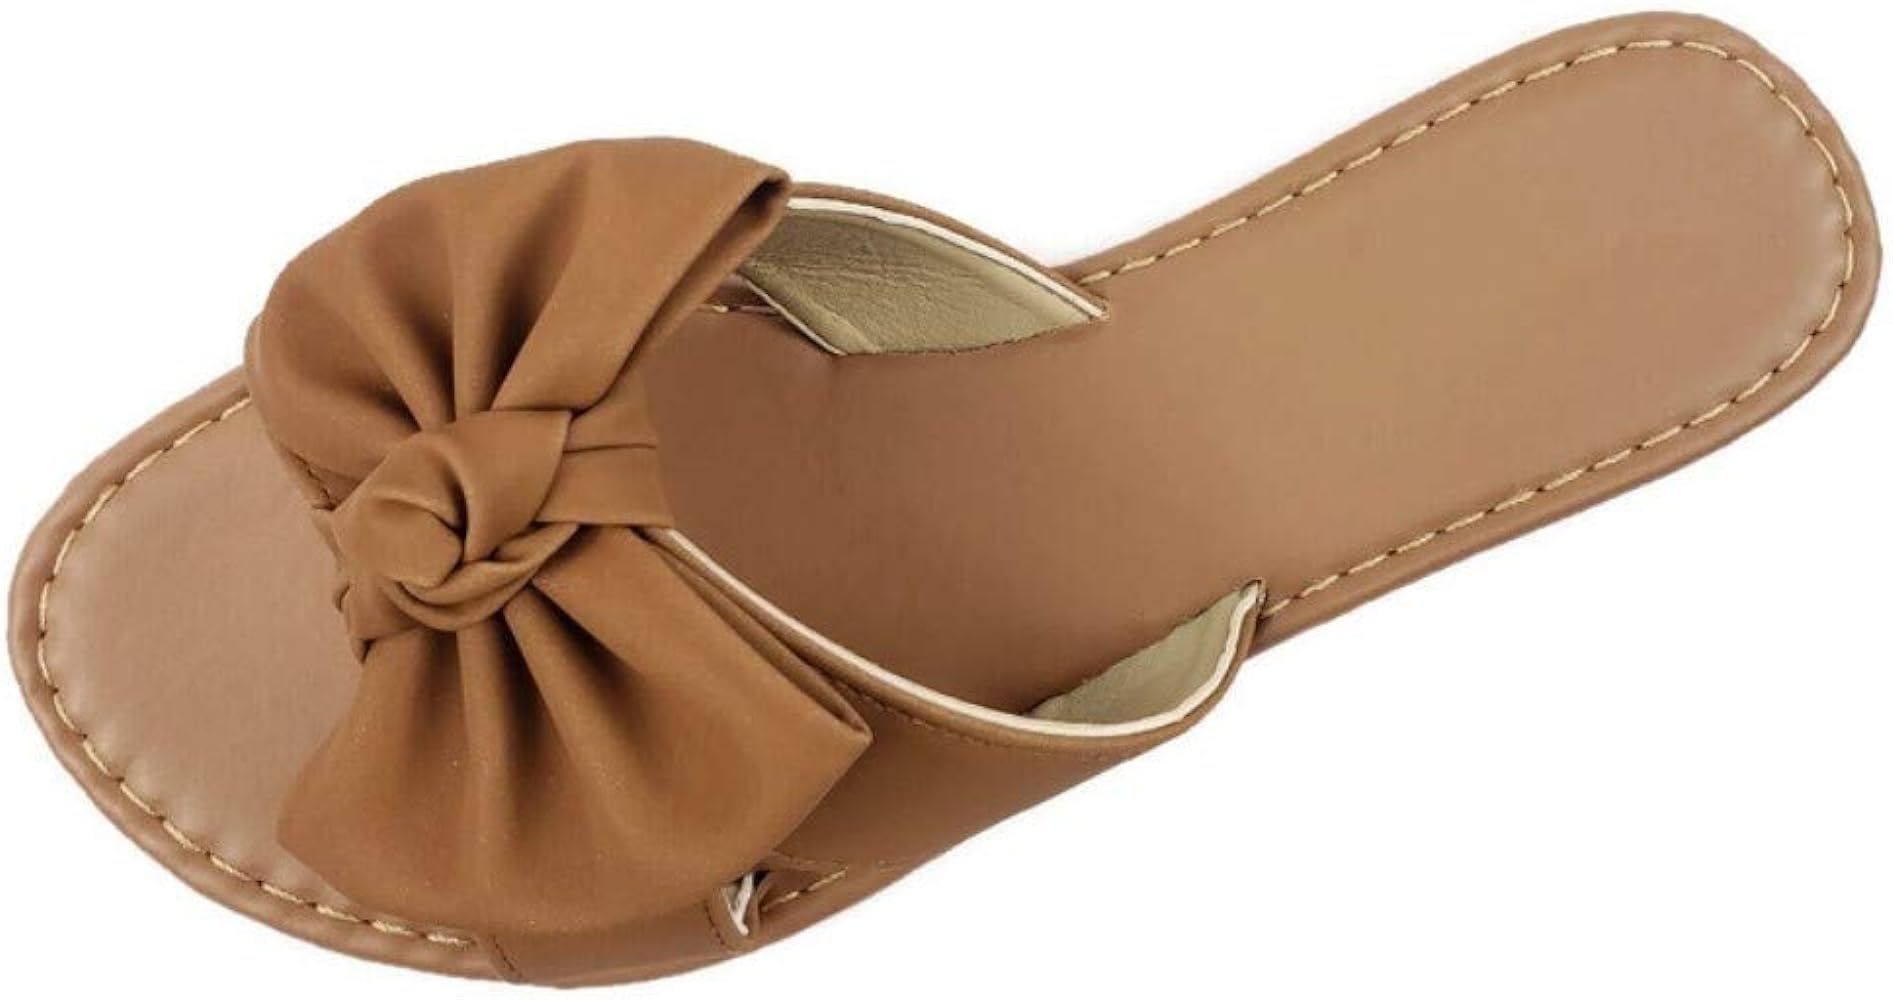 SAMANTHA Sandals Slip On Slide Flat with Twist Knot Bow | Amazon (US)